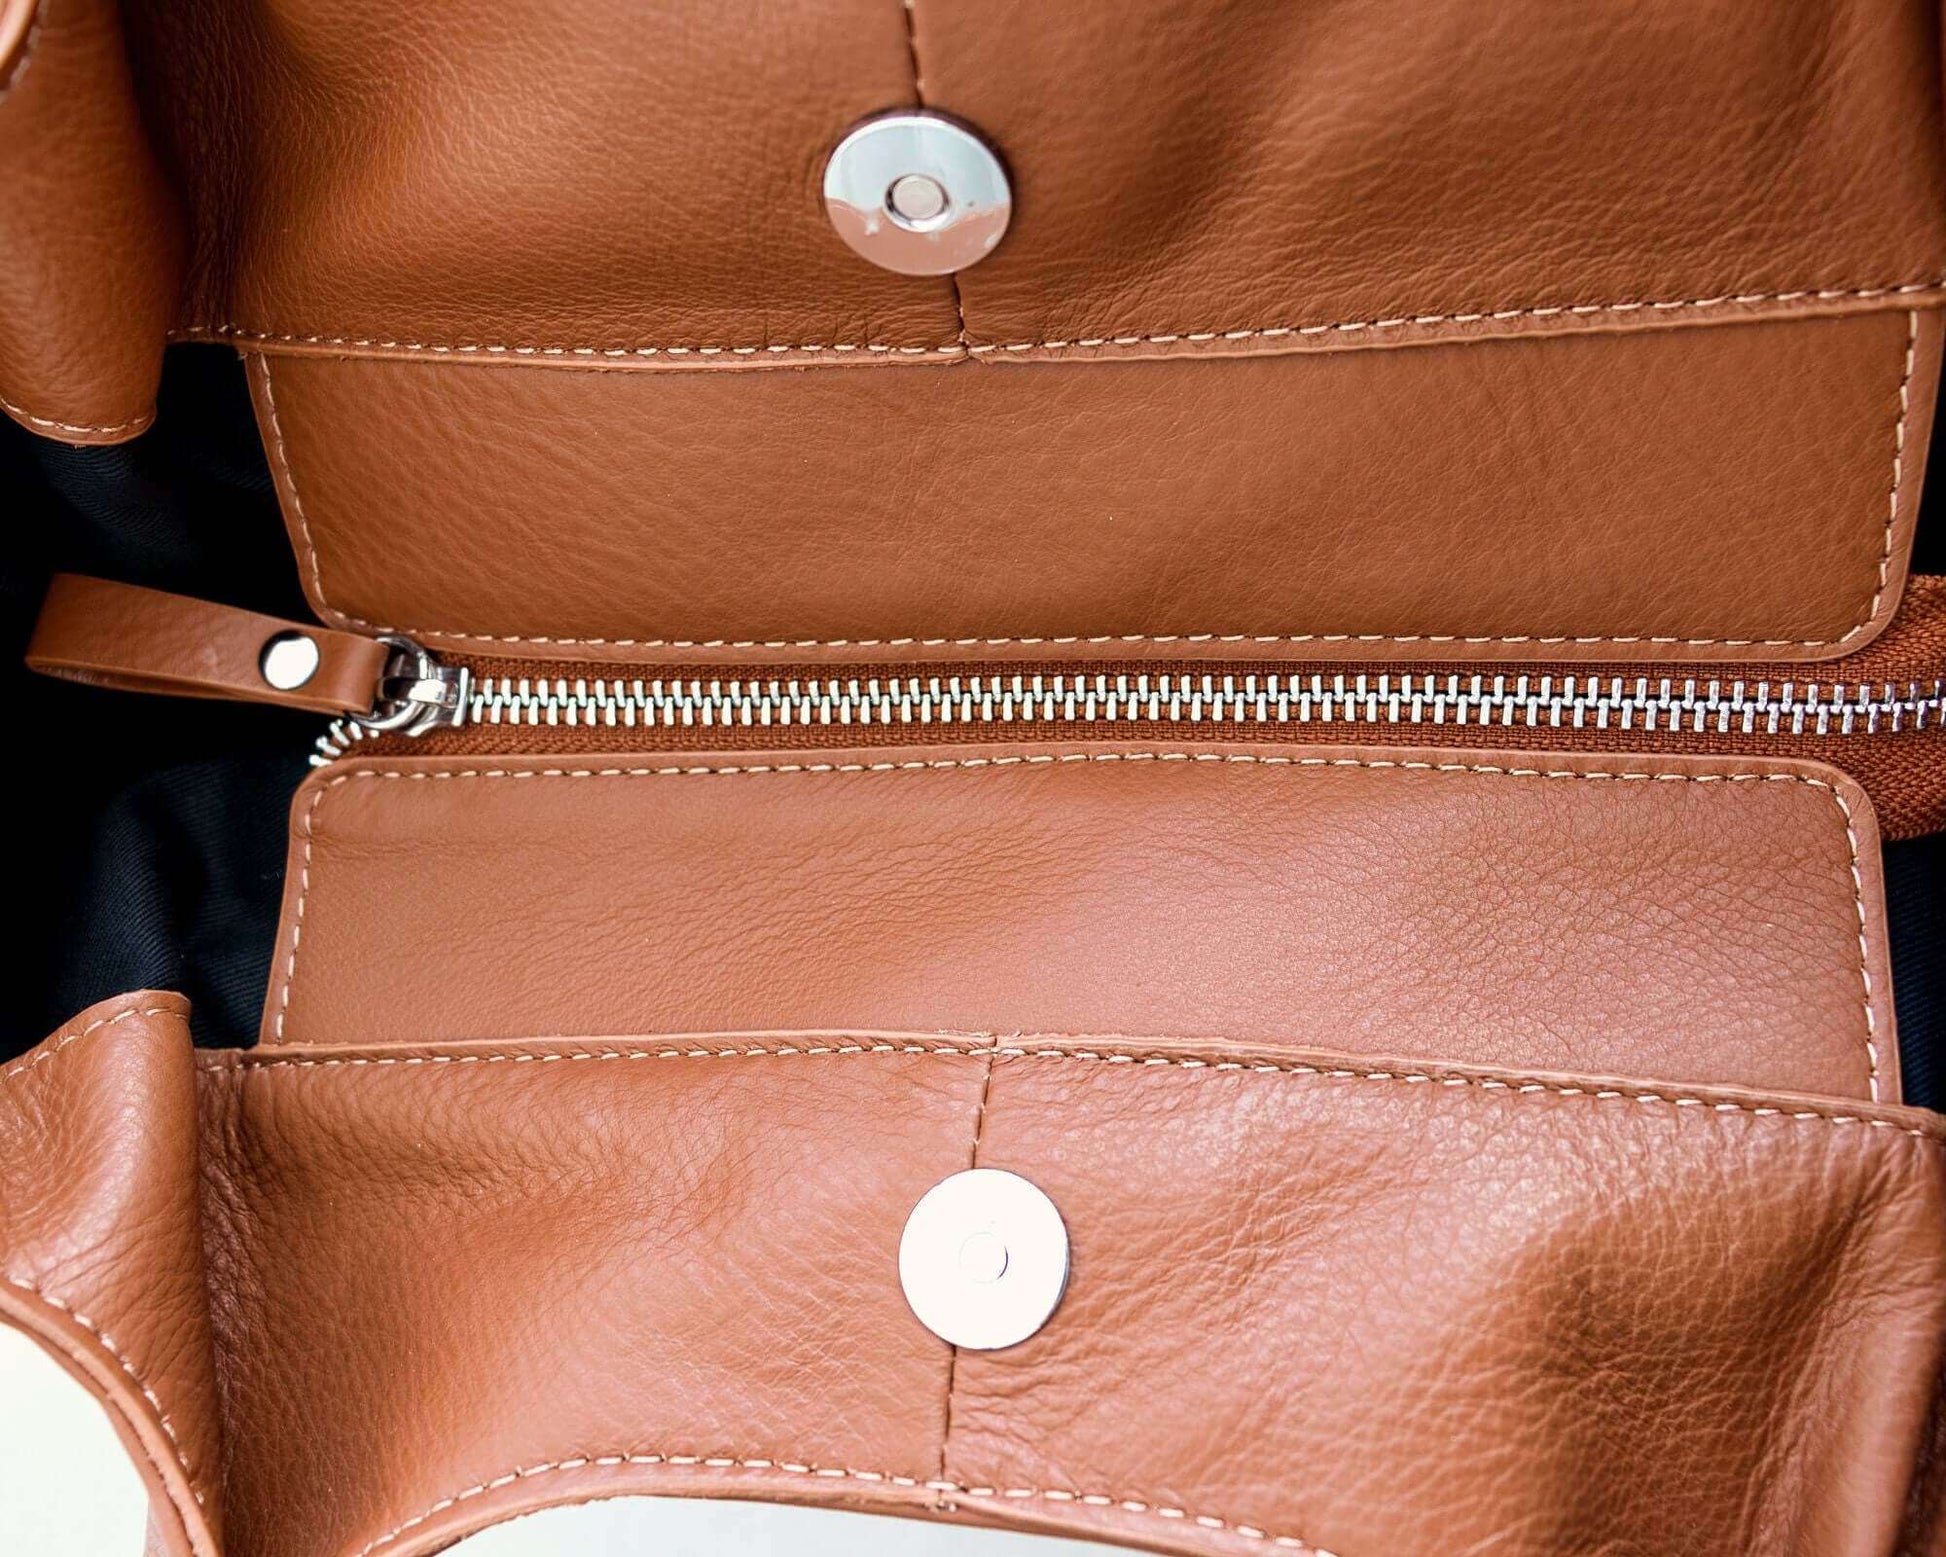 Leather Tote Bag, Camel Brown, Two-Toned Shoulder Bag, Crossbody Bag, Expandable, "Maya" Bag